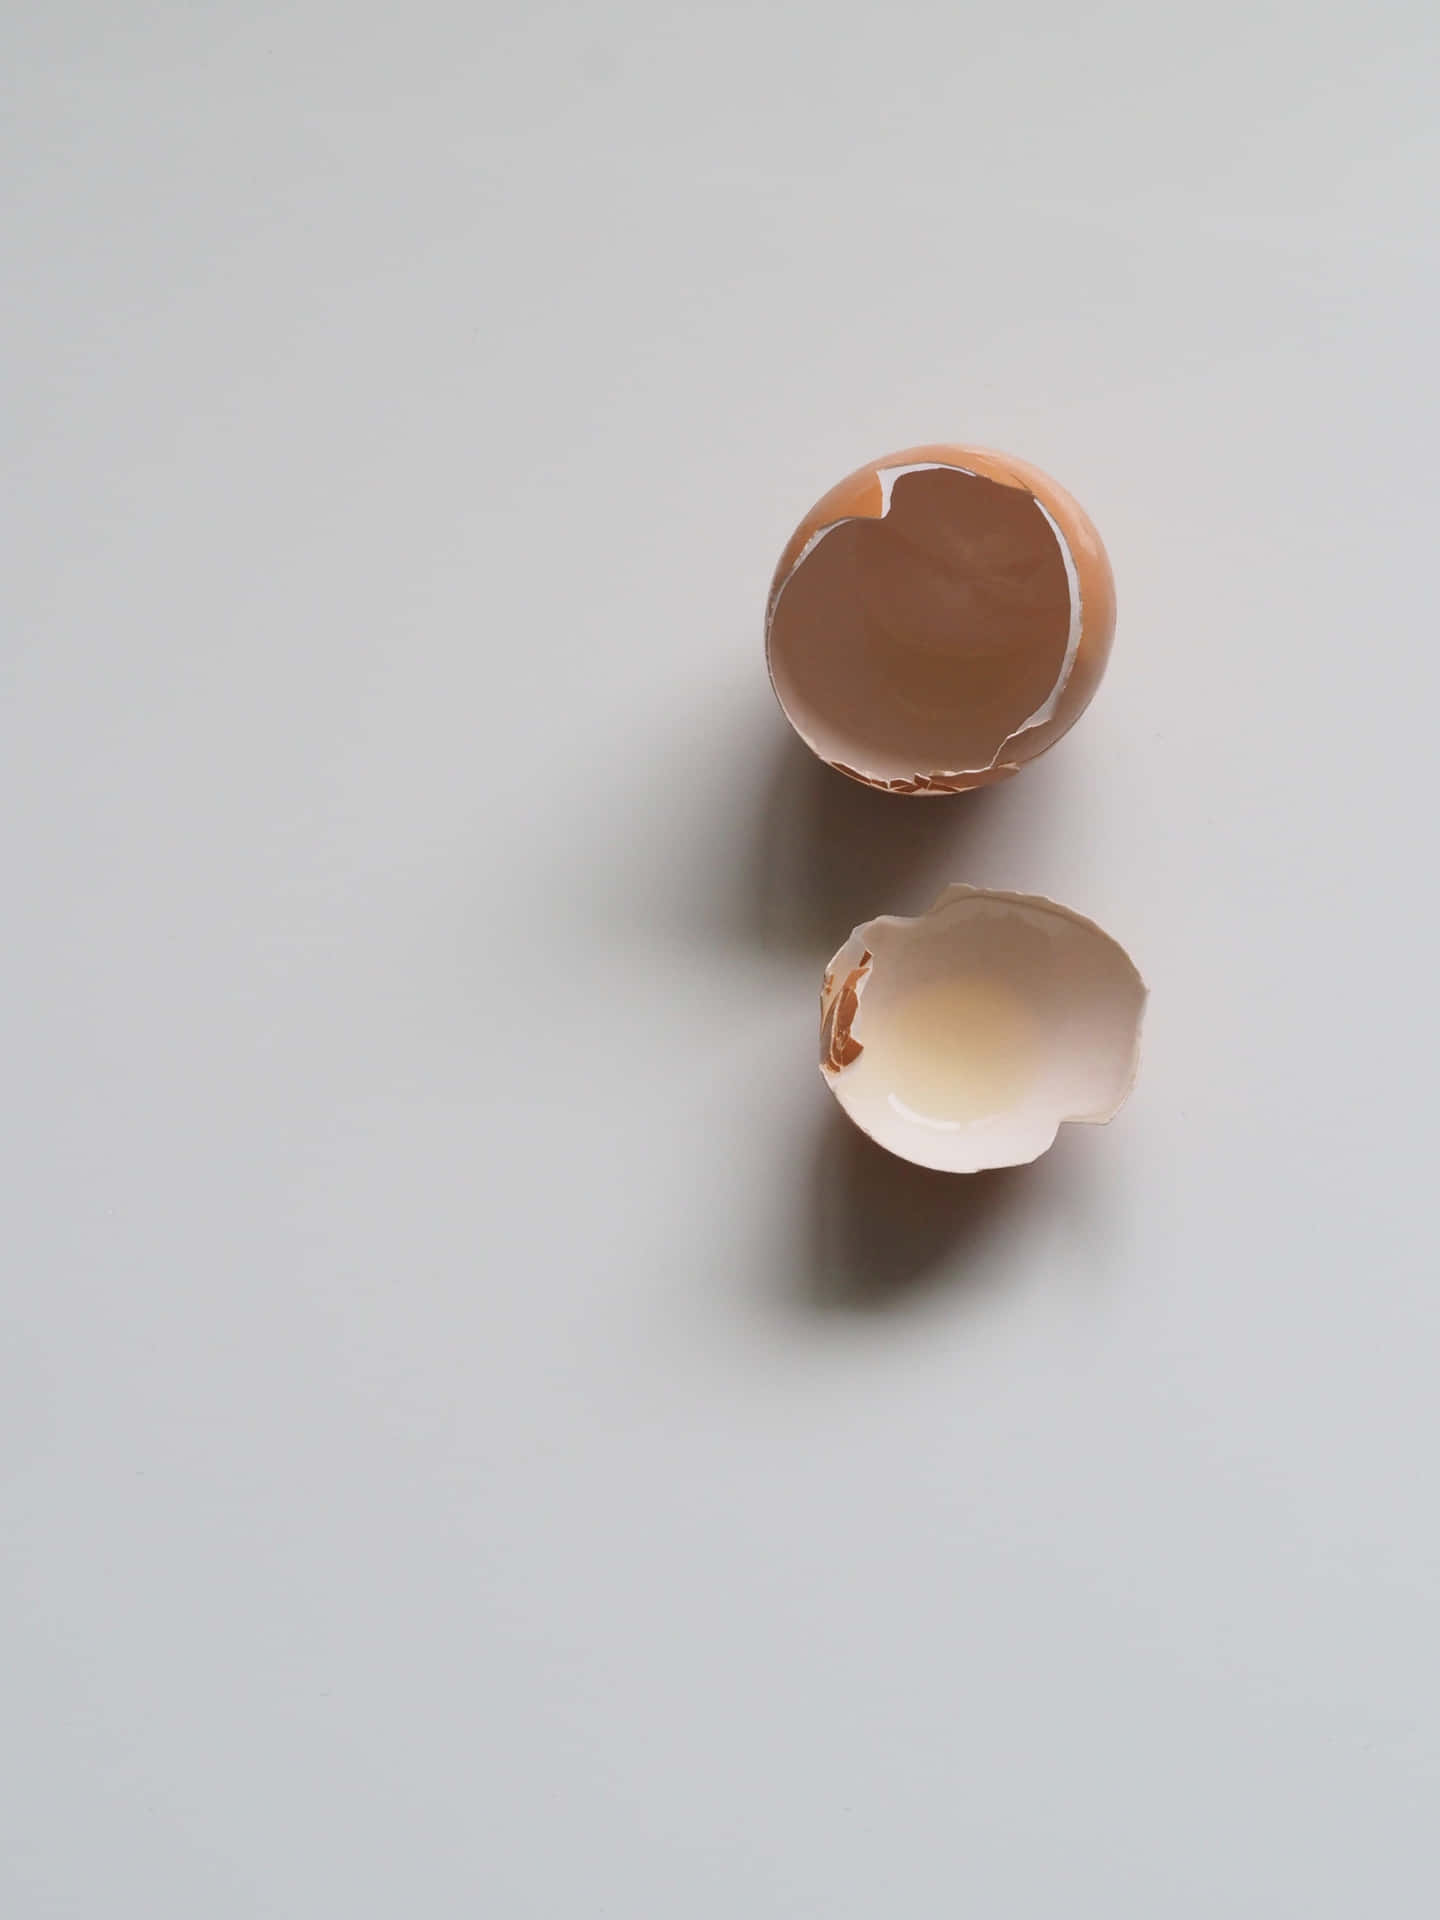 Empty Egg Shell Background